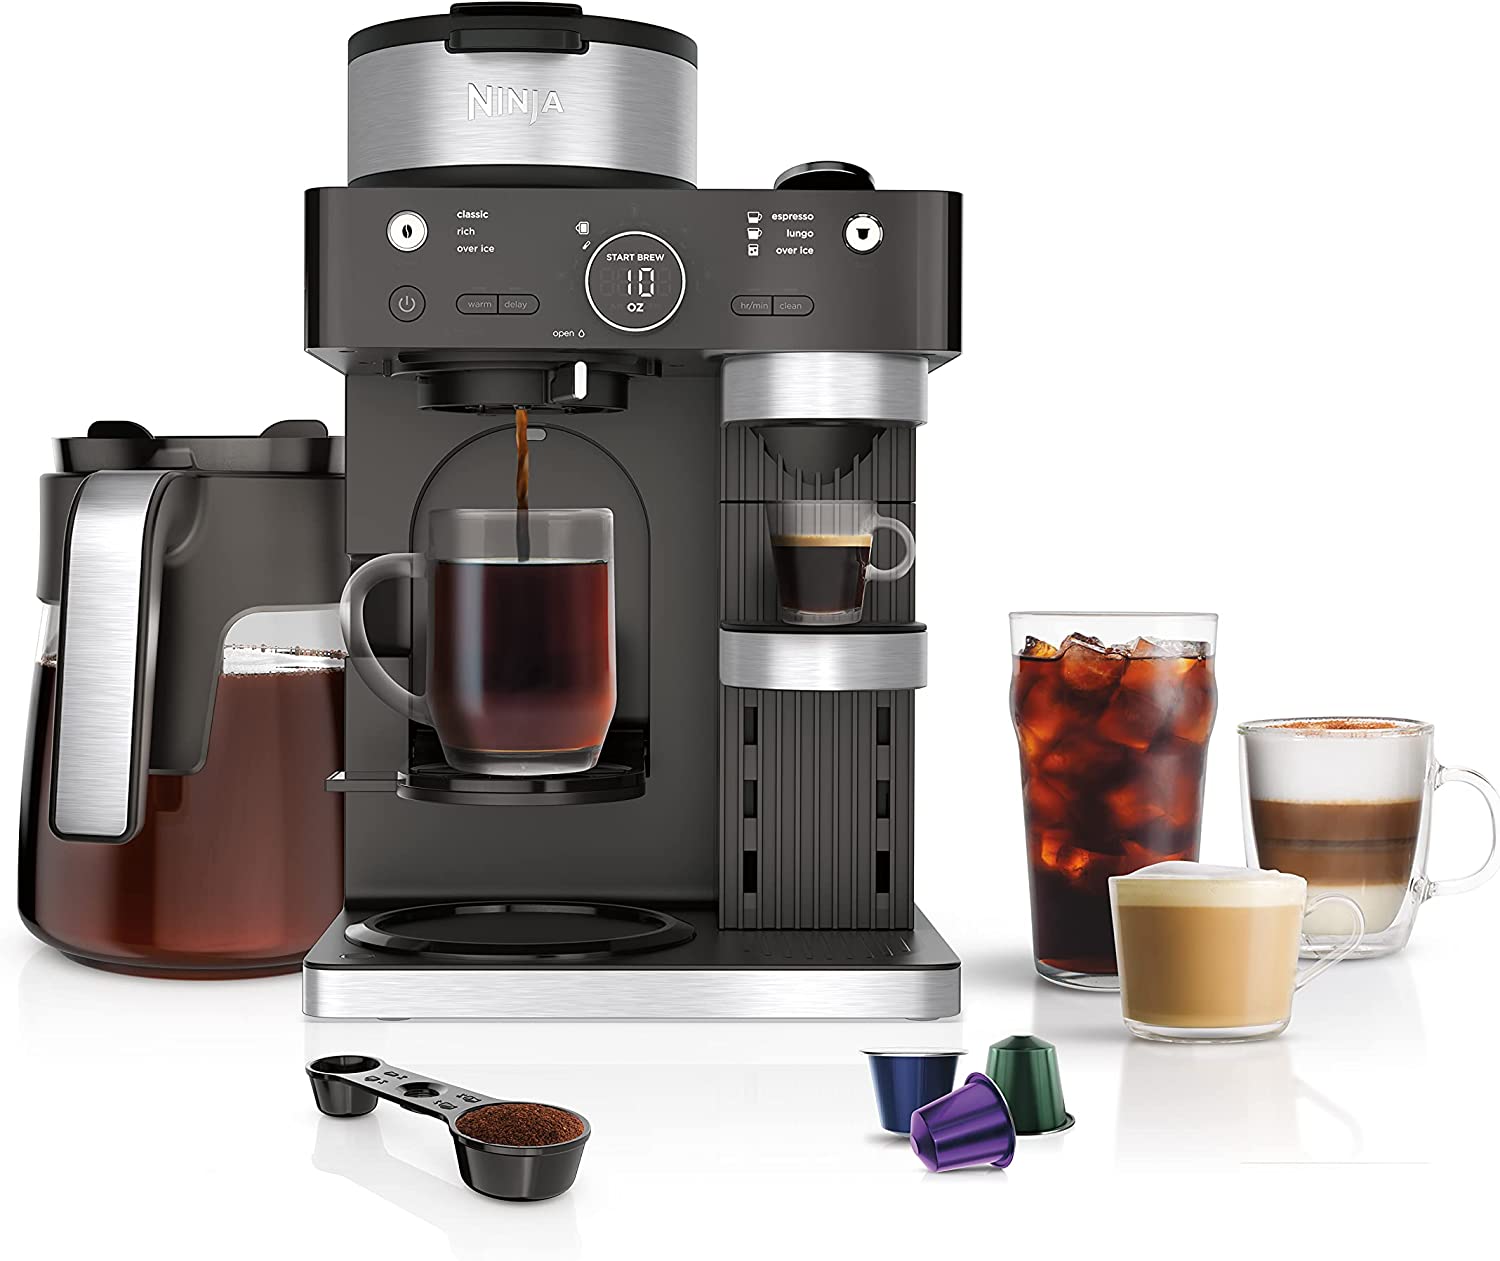 Ninja CFN601 Espresso & Coffee Barista System Review